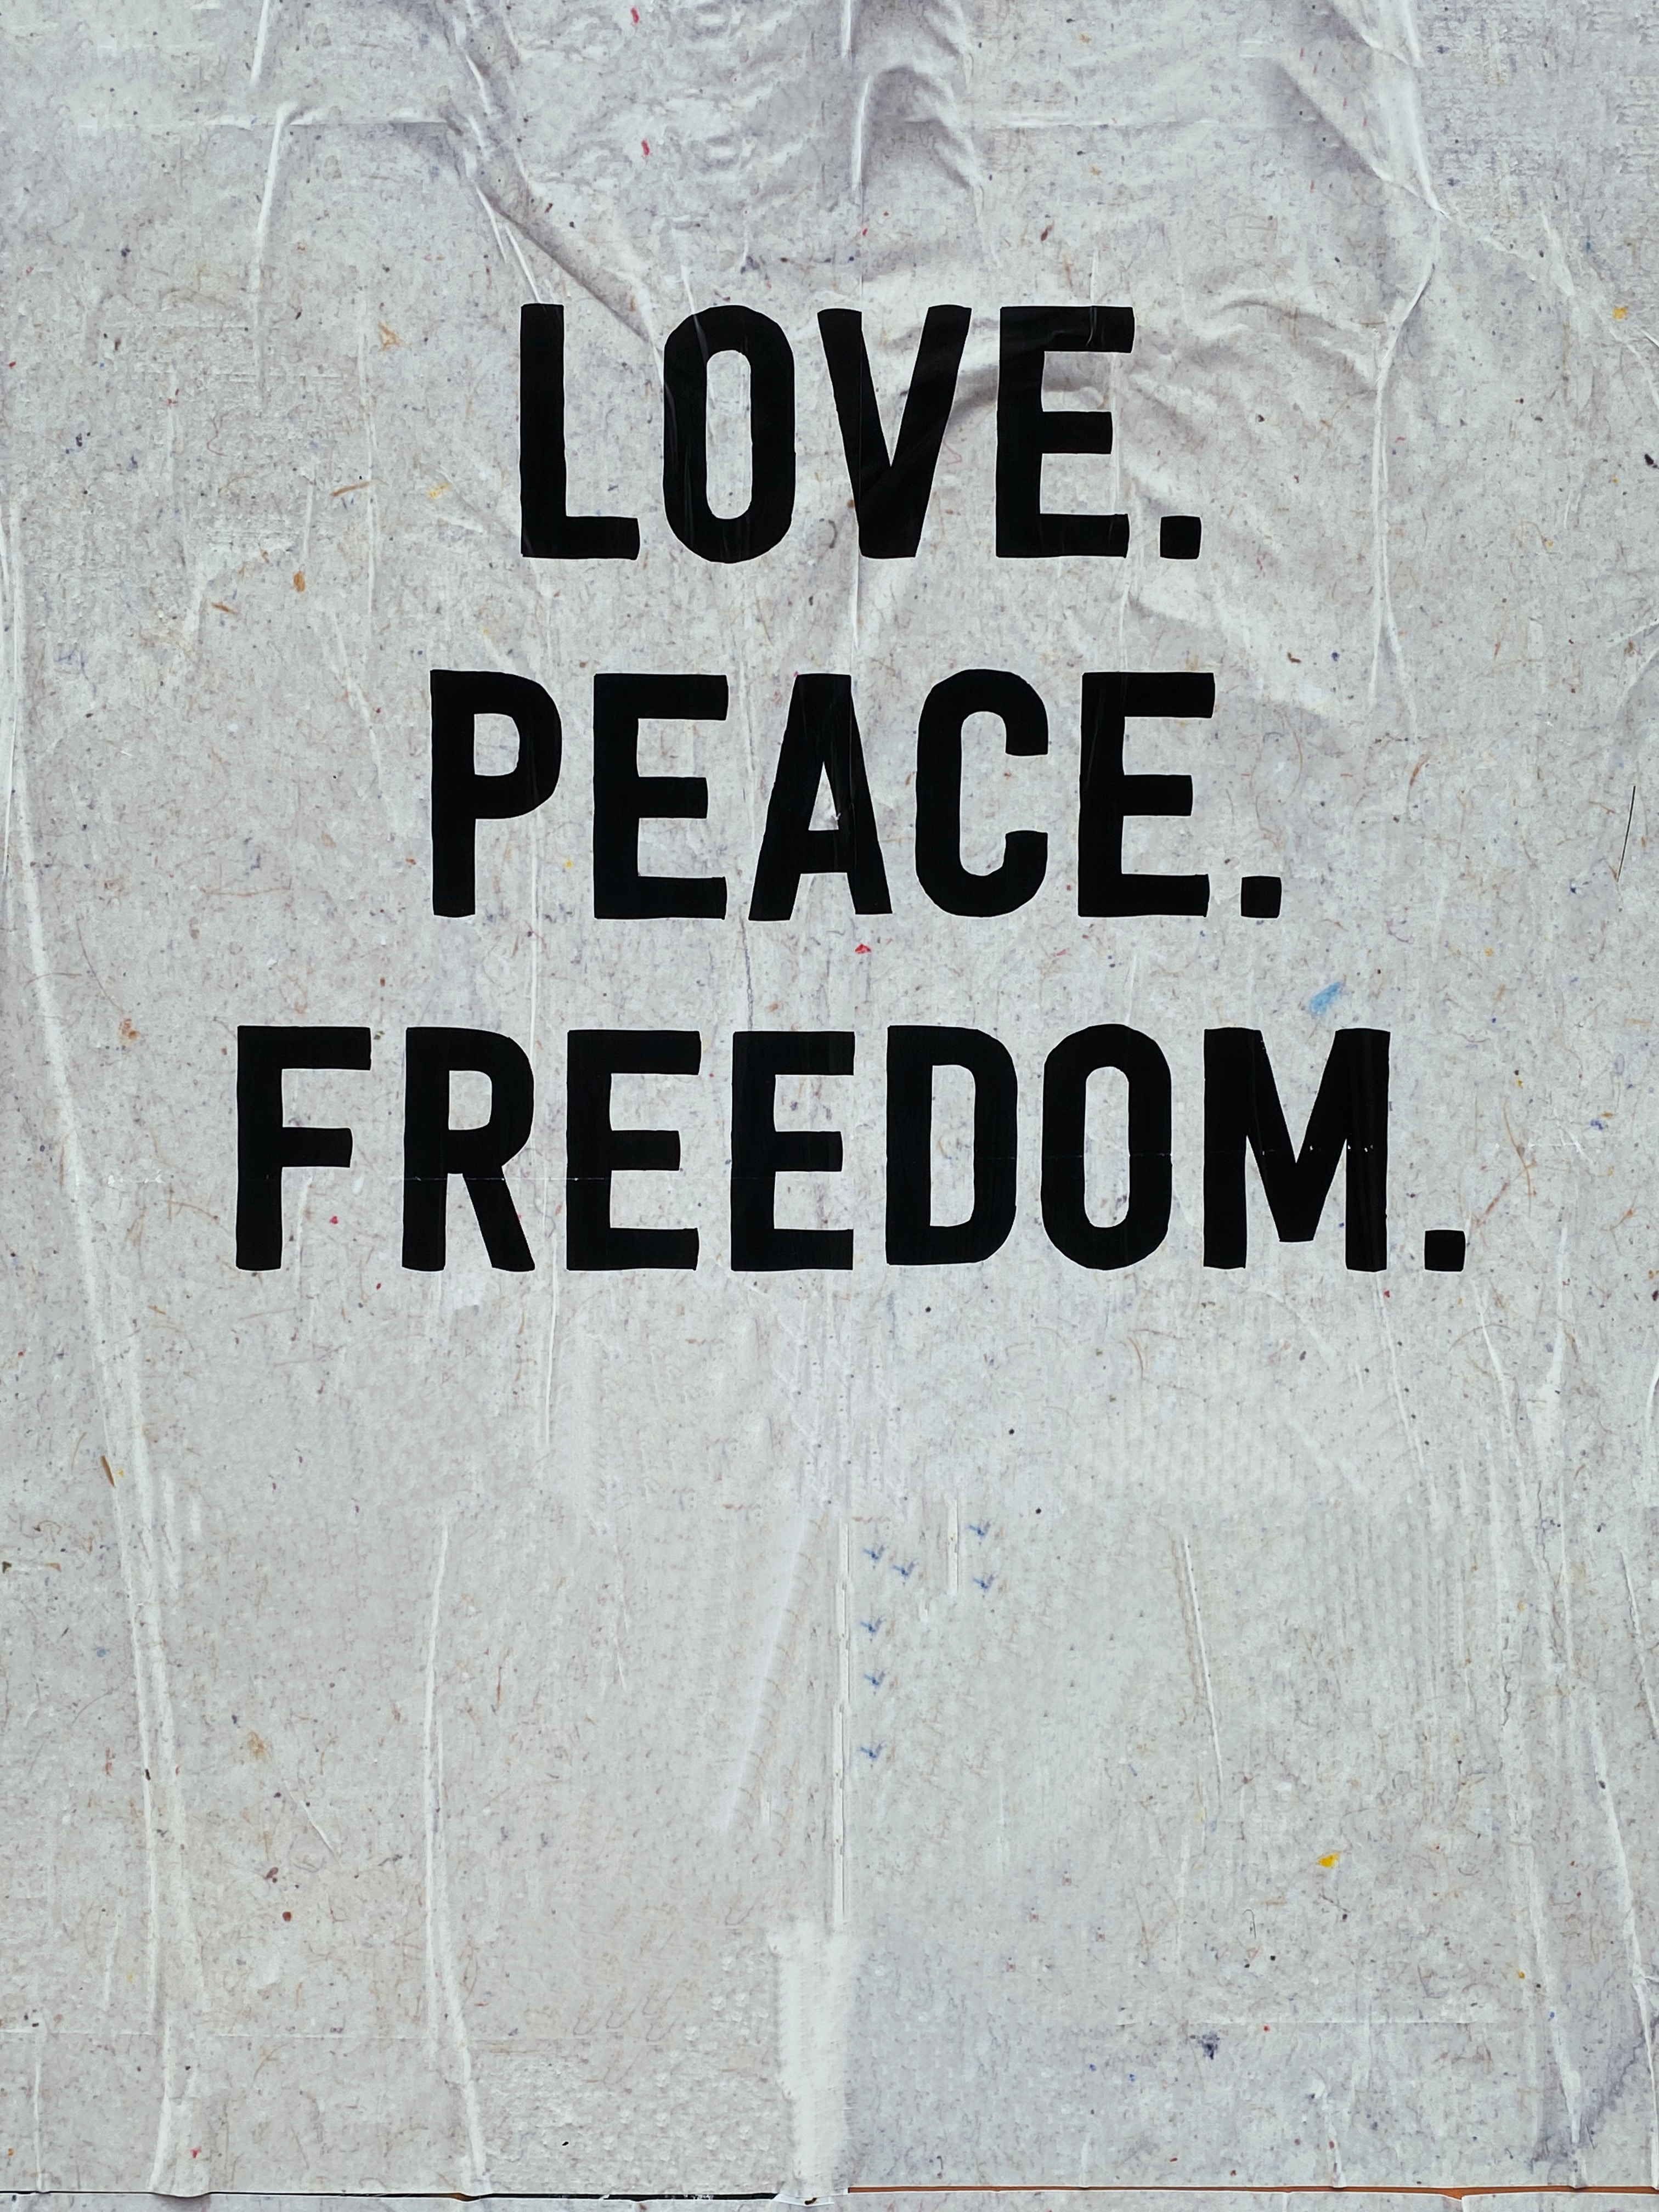 peace, freedom, words, love, inscription, world